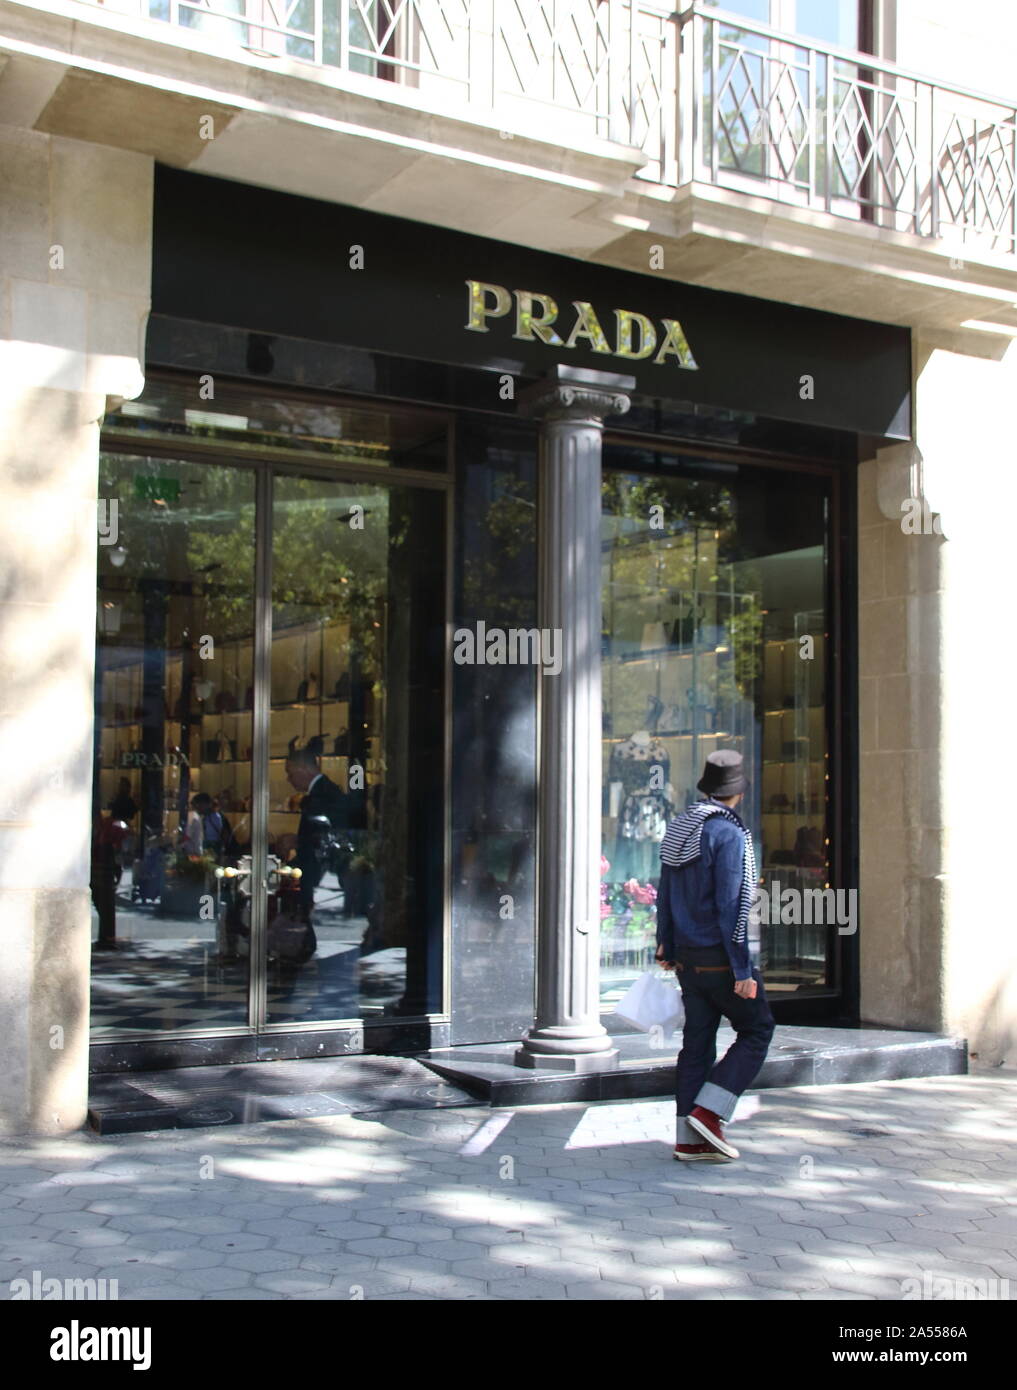 Prada luxury footwear store seen in Barcelona Stock Photo - Alamy